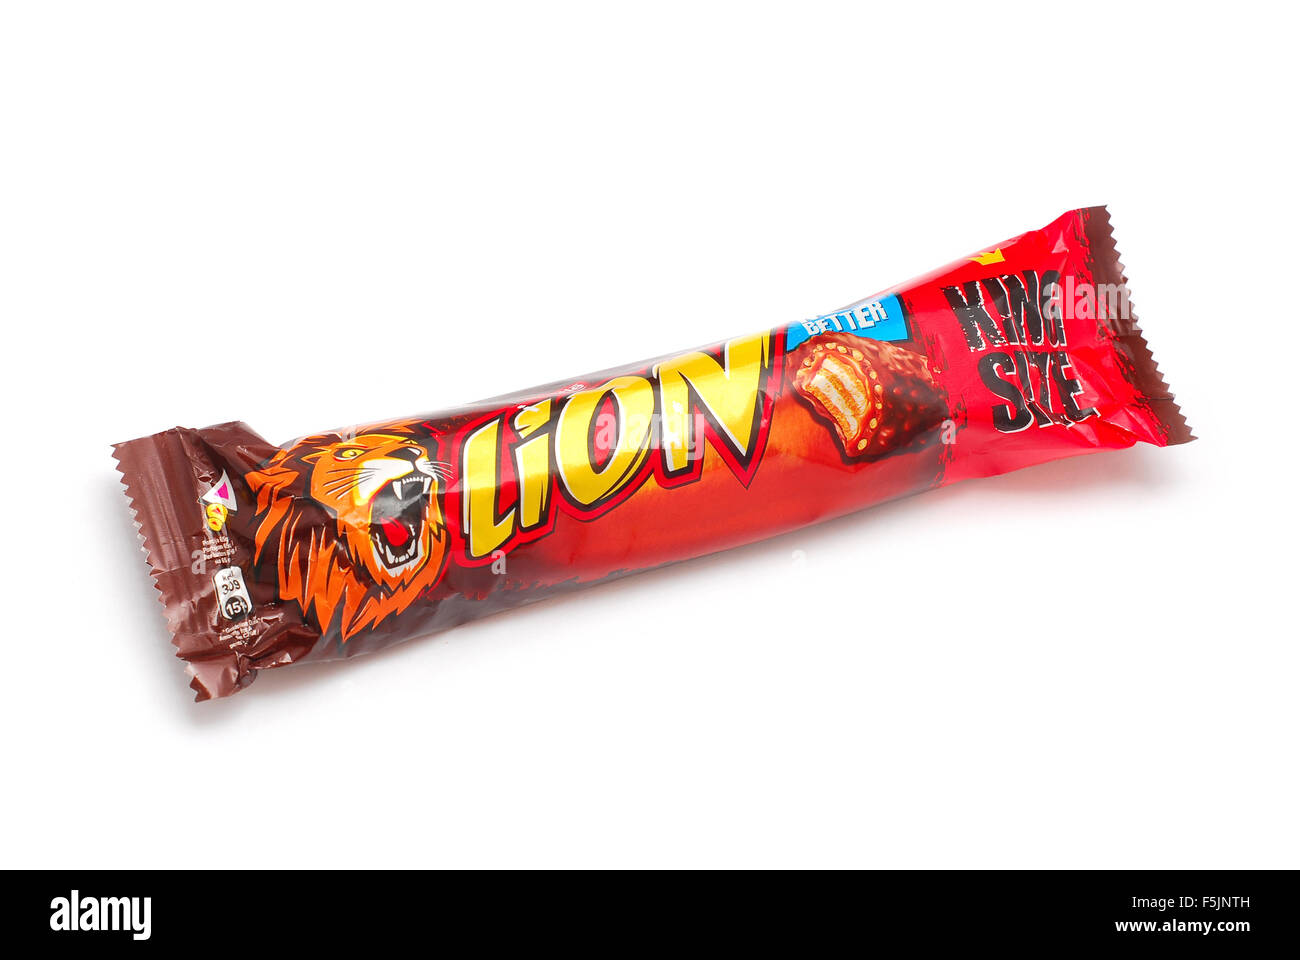 lion chocolate bar king size Stock Photo - Alamy